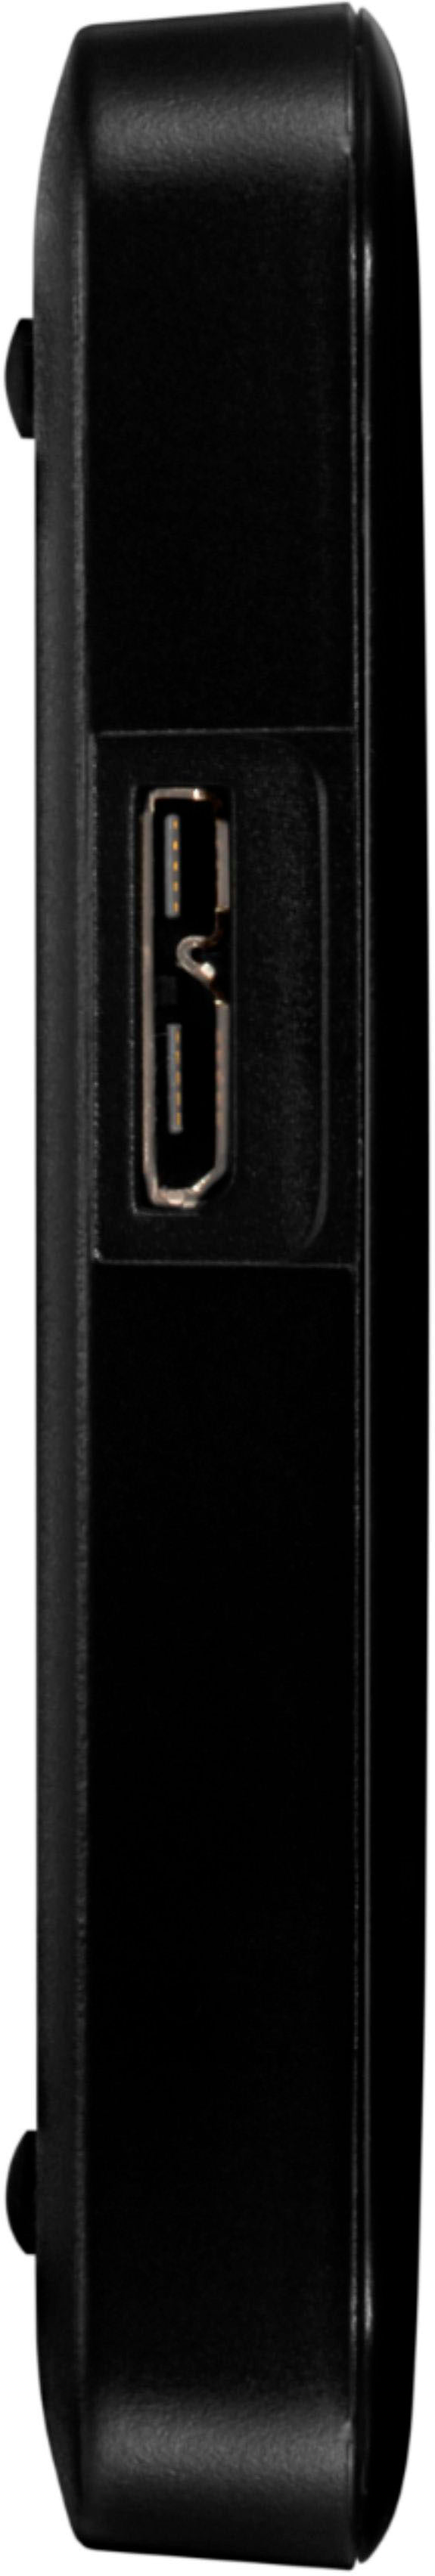 WD - Easystore 1TB External USB 3.0 Portable Hard Drive_8